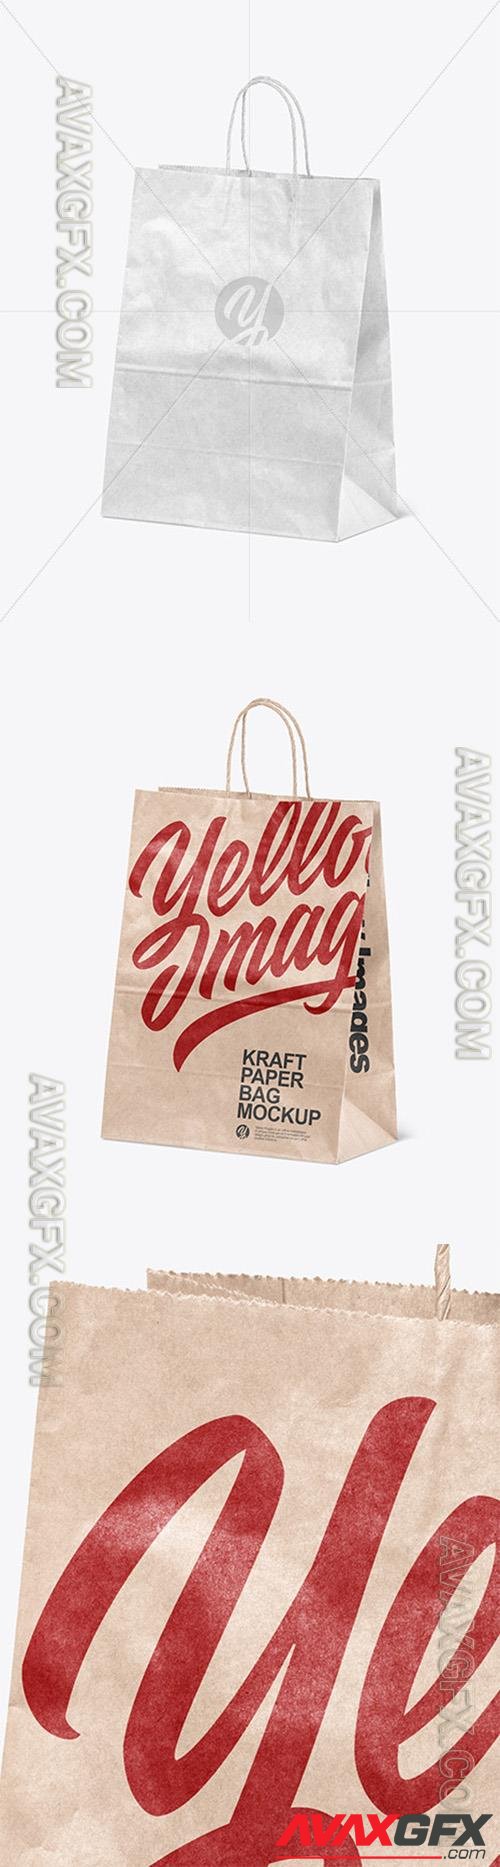 Kraft Paper Shopping Bag Mockup 89329 TIF